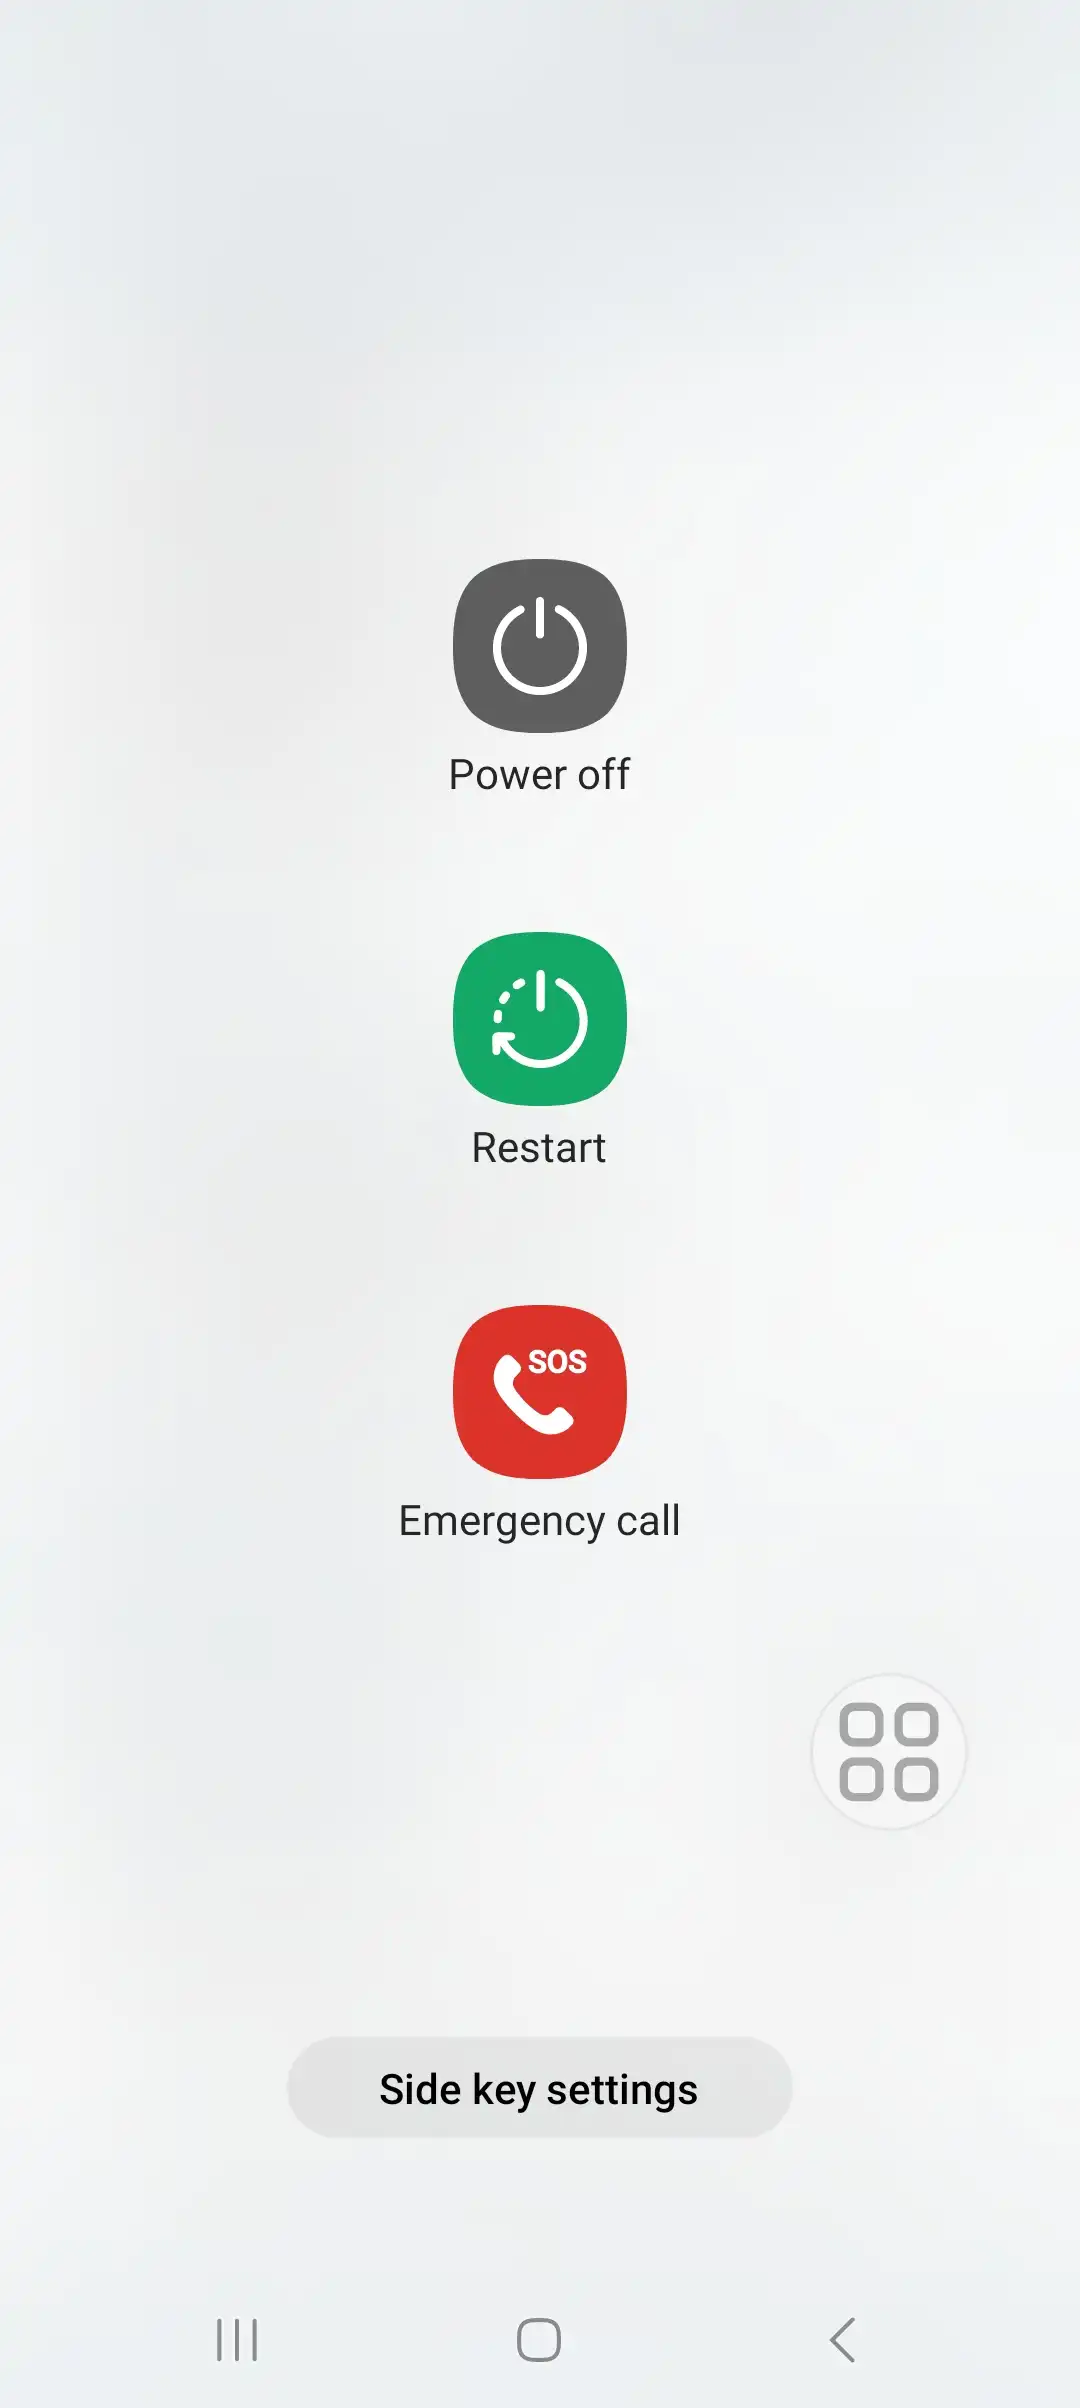 power menu to restart, power off or emergency call